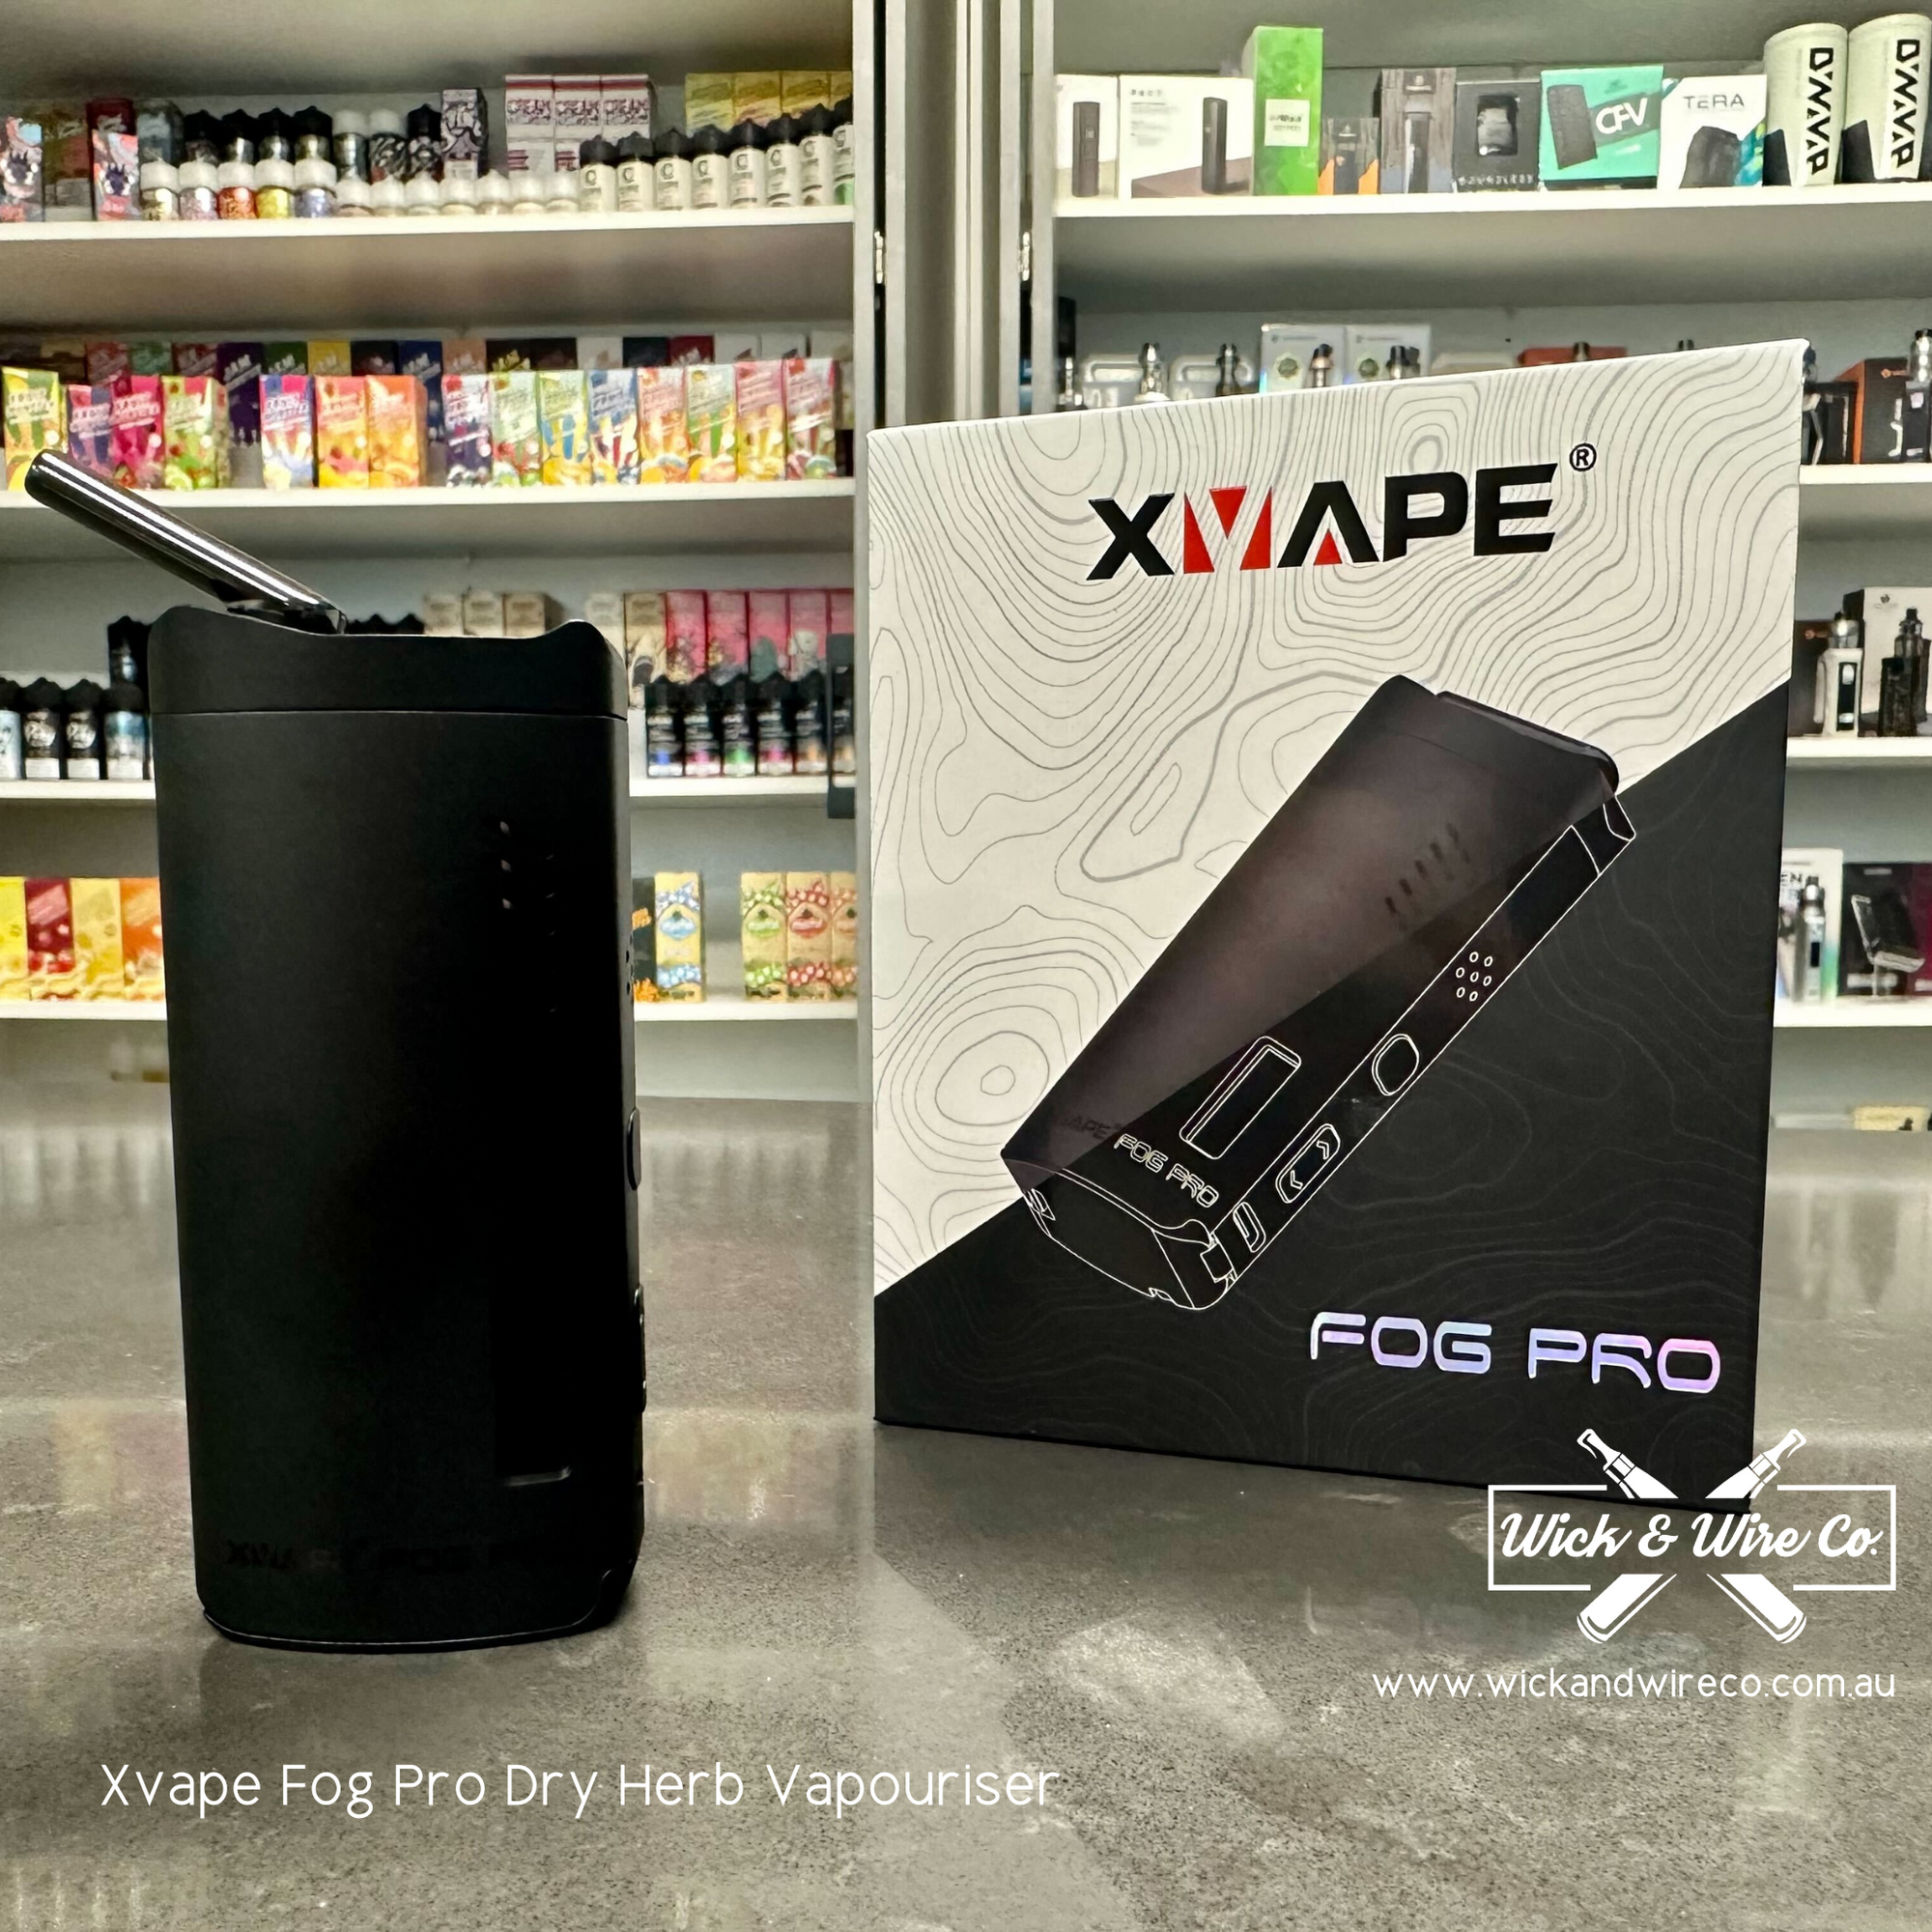 Buy Xvape Fog Pro Dry Herb Vapouriser - Wick and Wire Co Melbourne Vape Shop, Victoria Australia